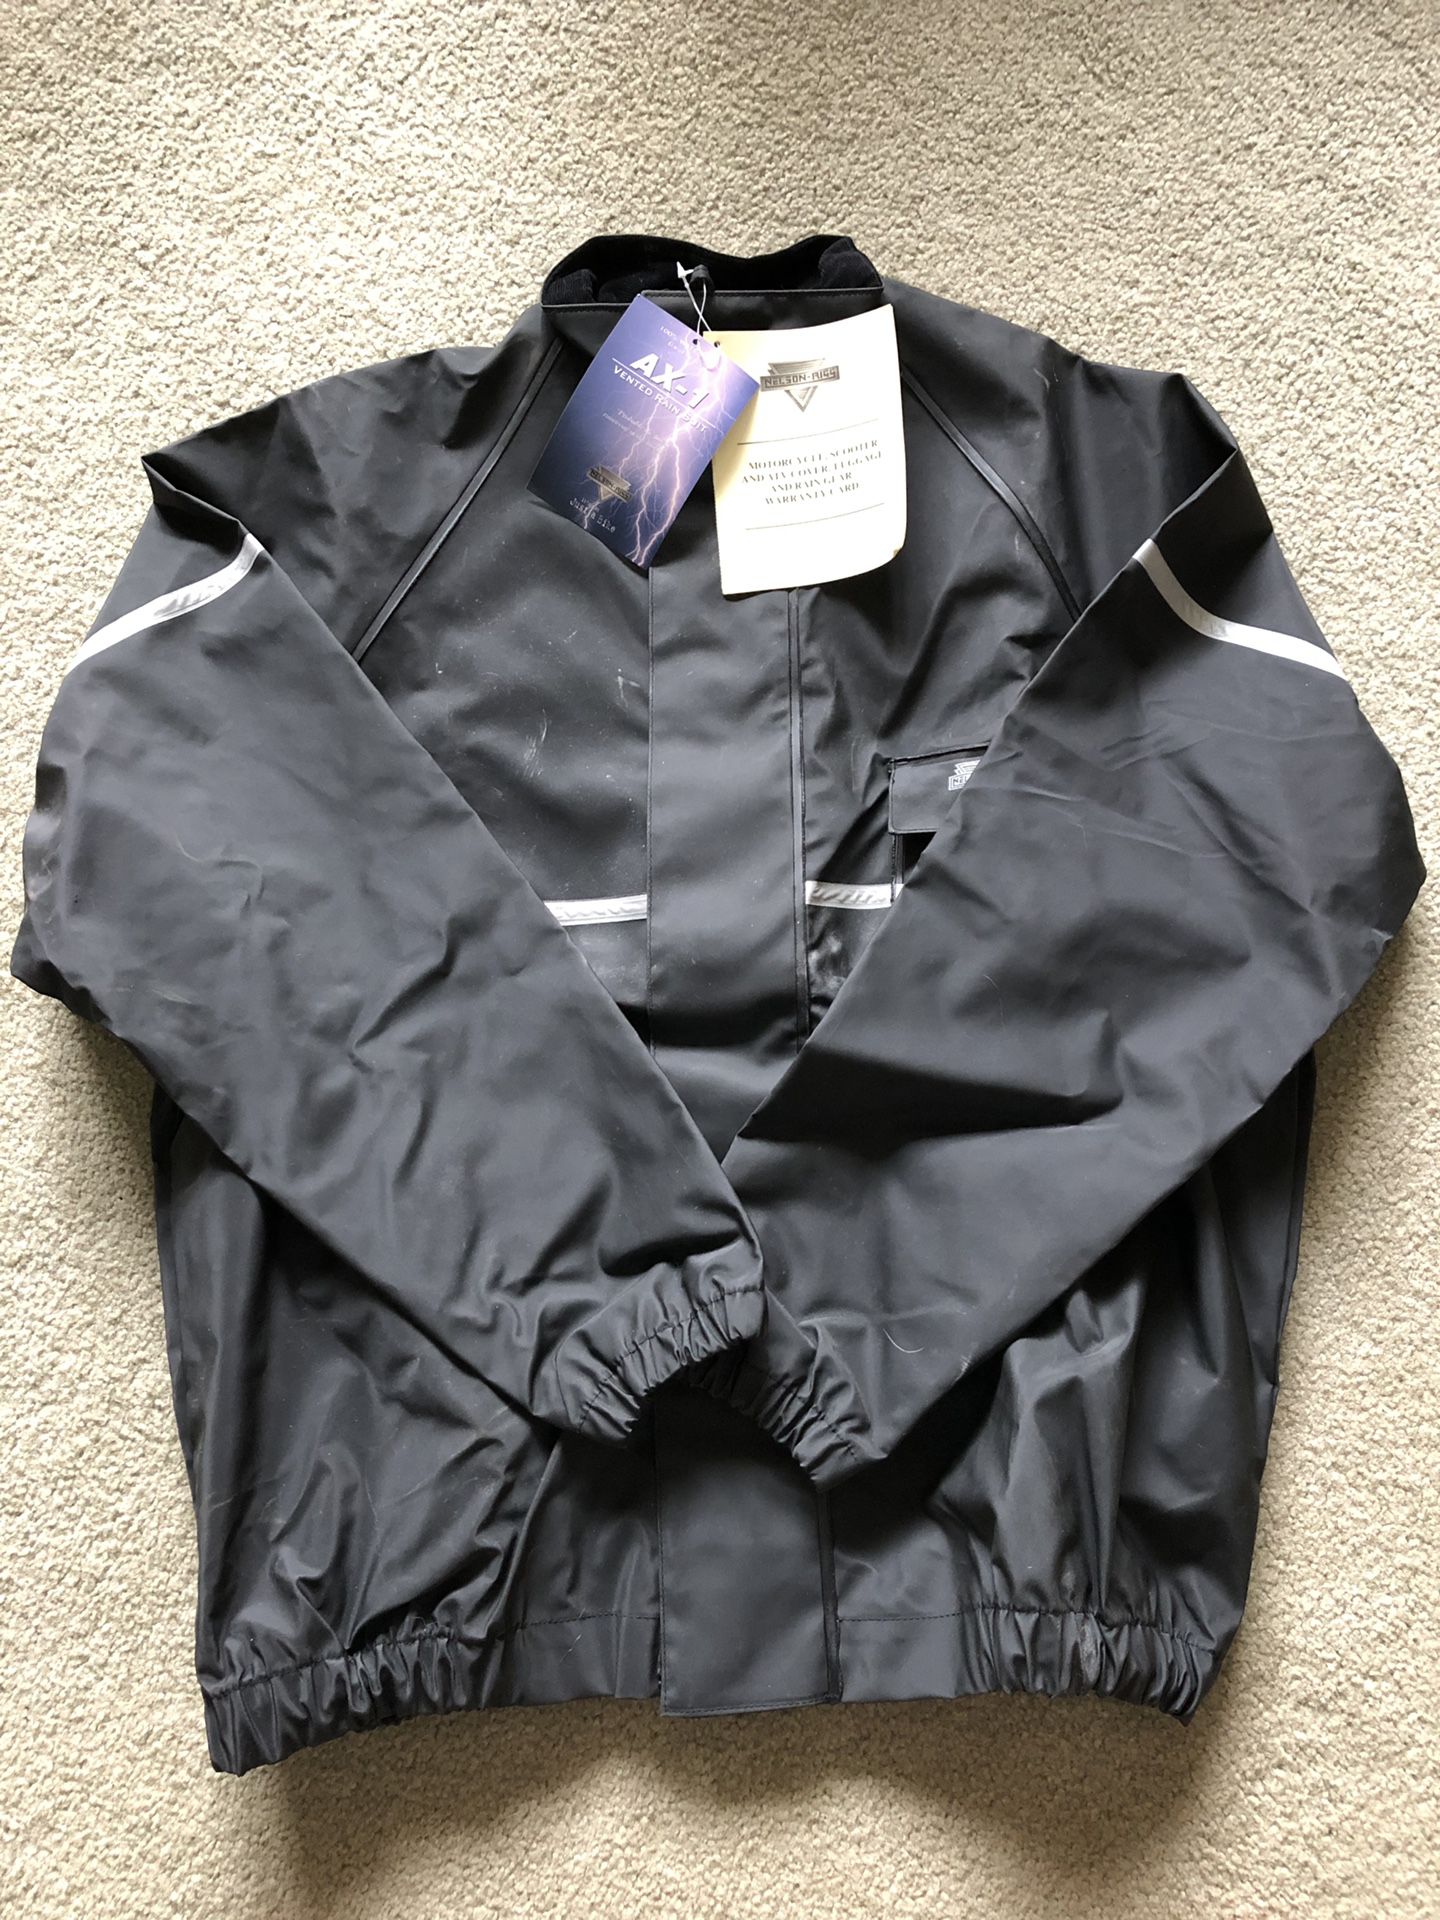 Nelson-Rigg rain gear / suit, large (L) - NEW